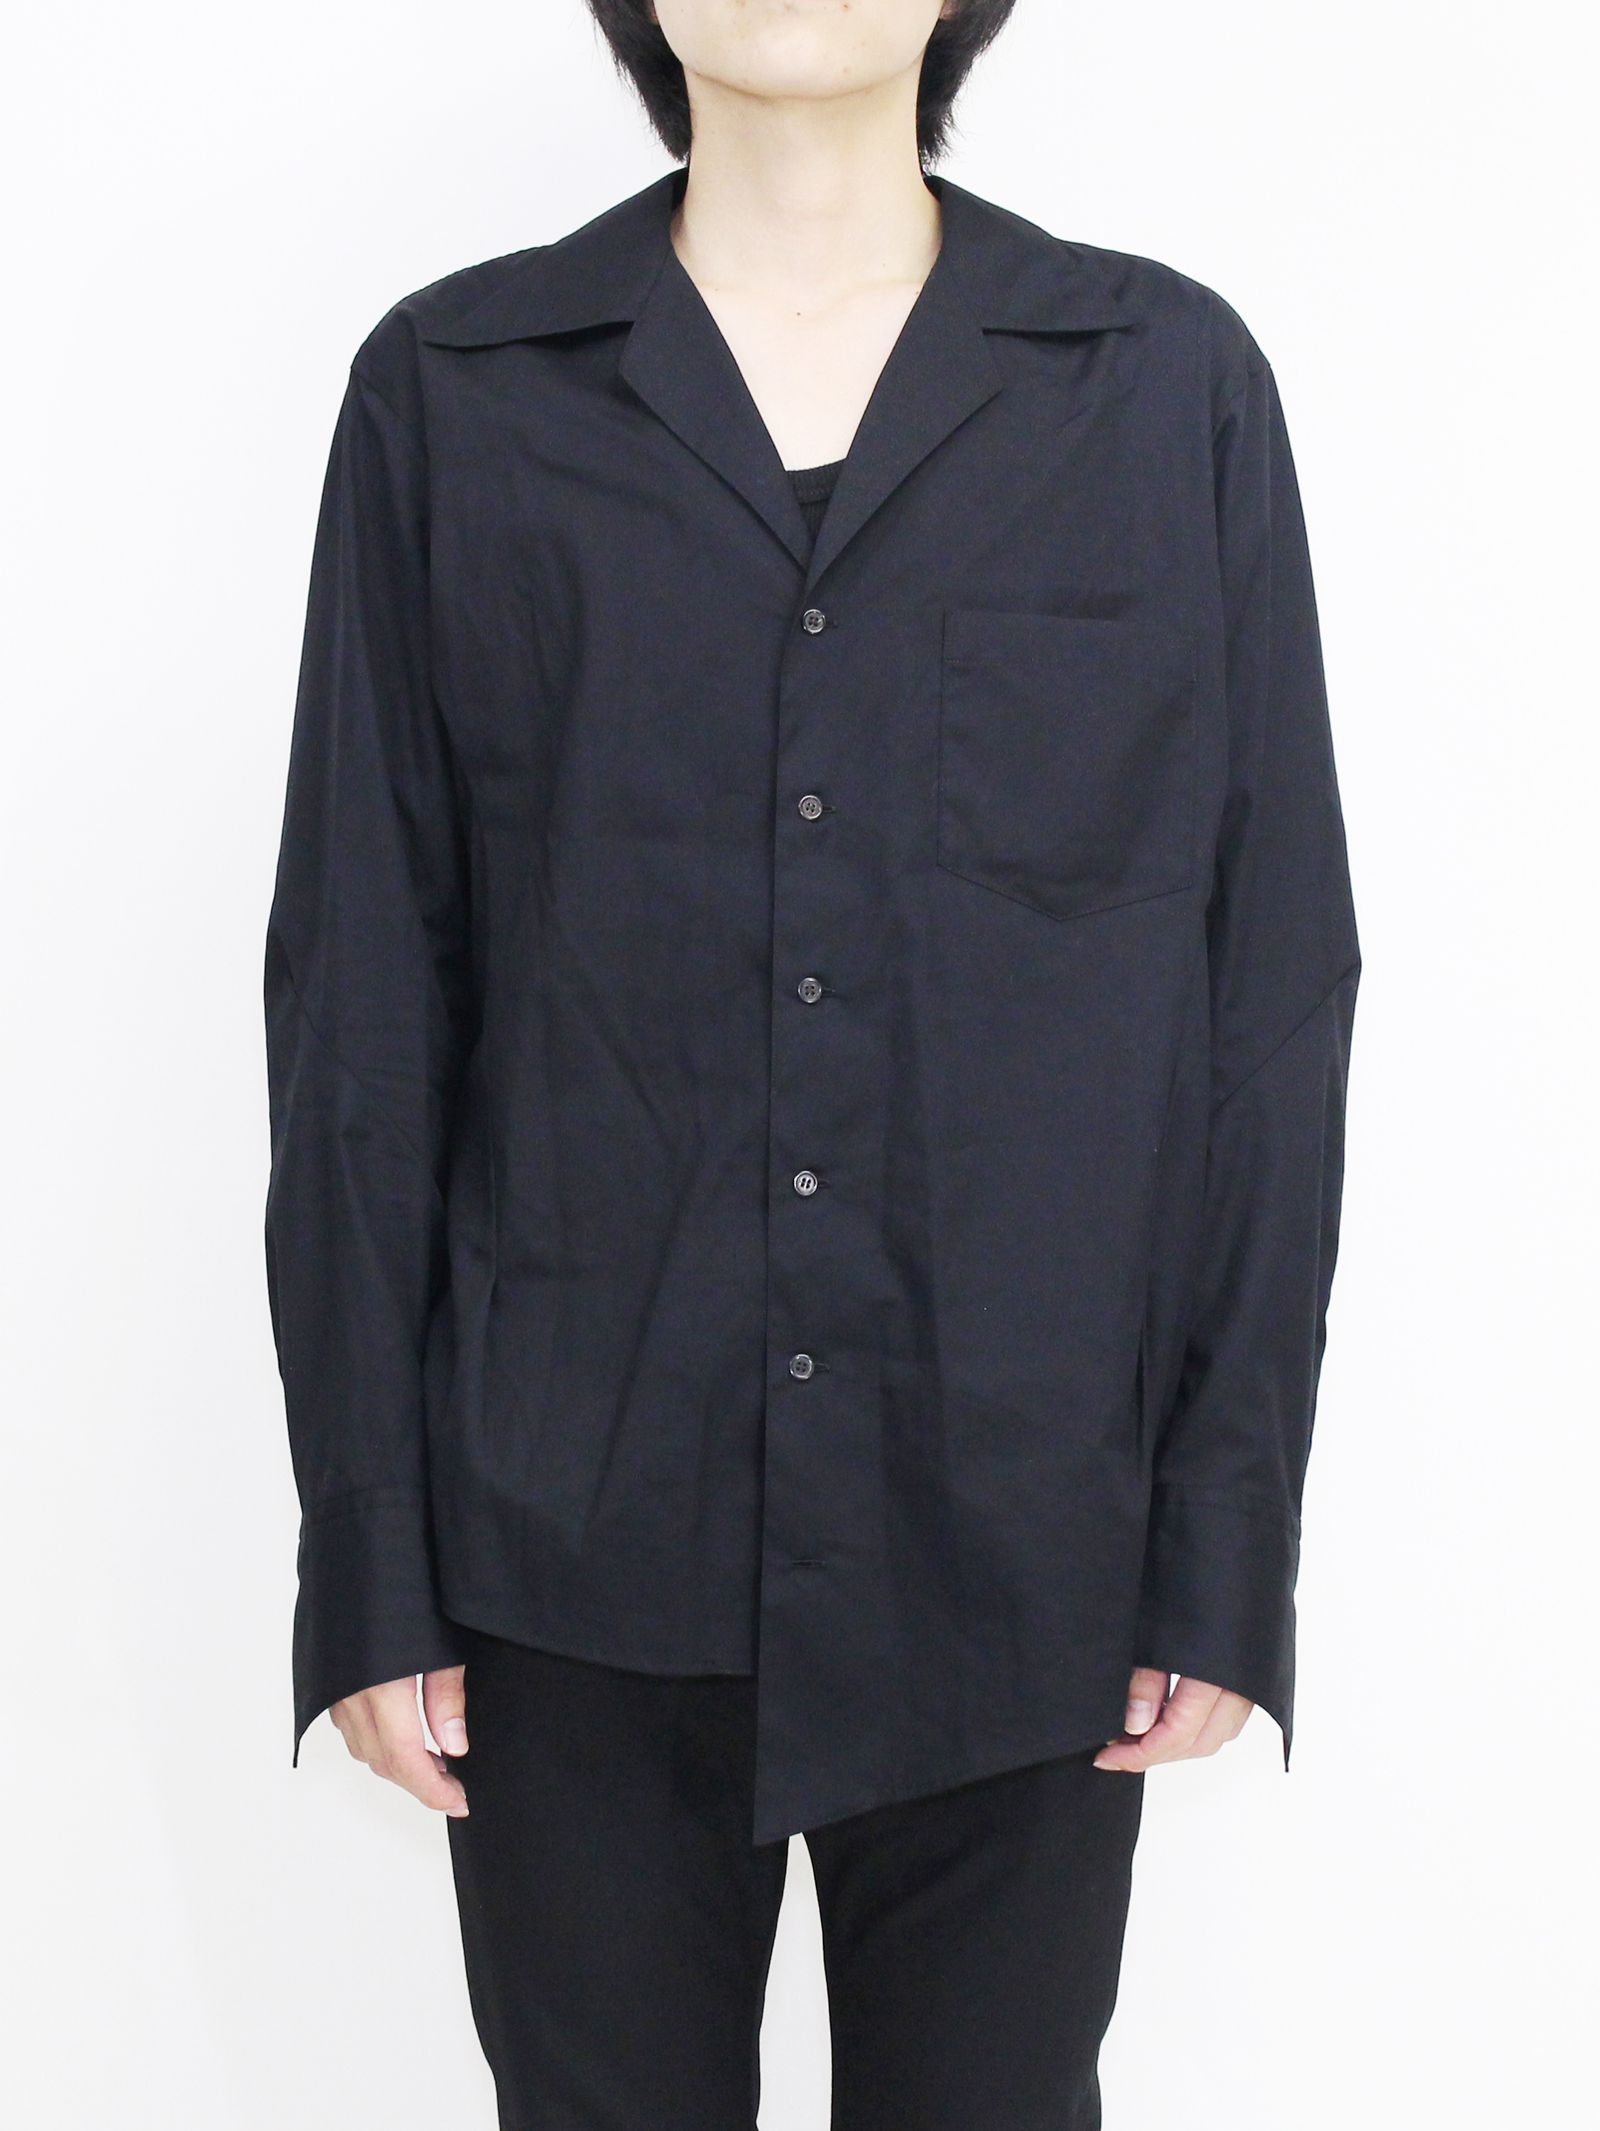 sulvam - オープンカラーシャツ / Broad open collar shirt / ブラック